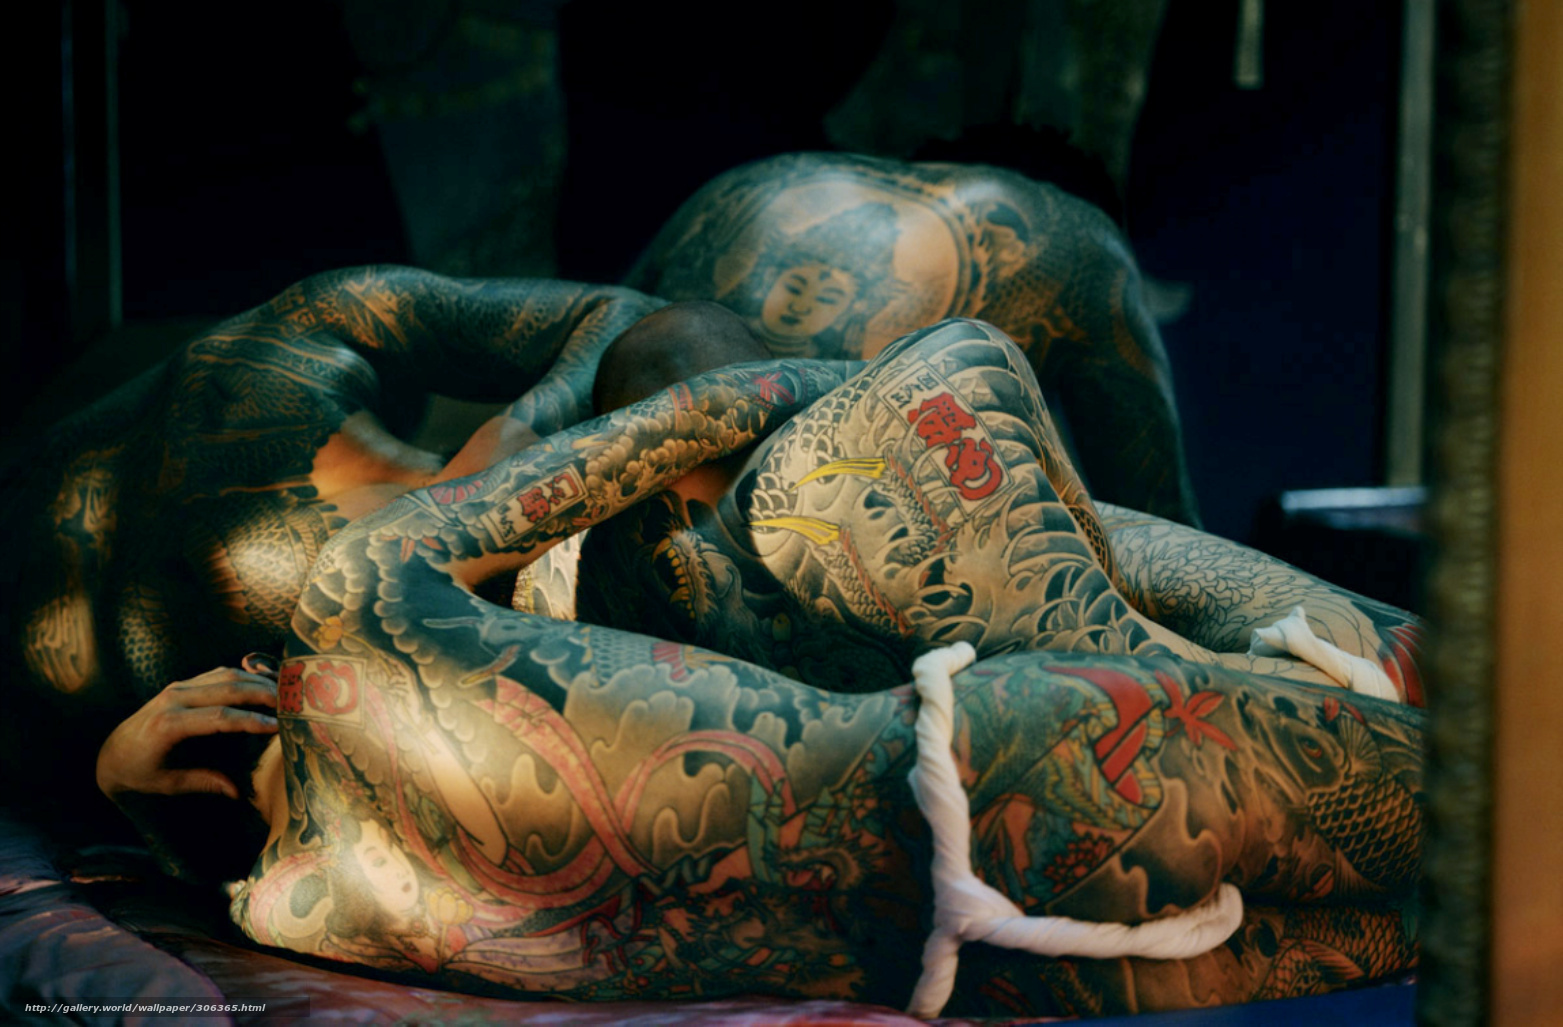 Wallpaper Body Art Tattoos Desktop In The